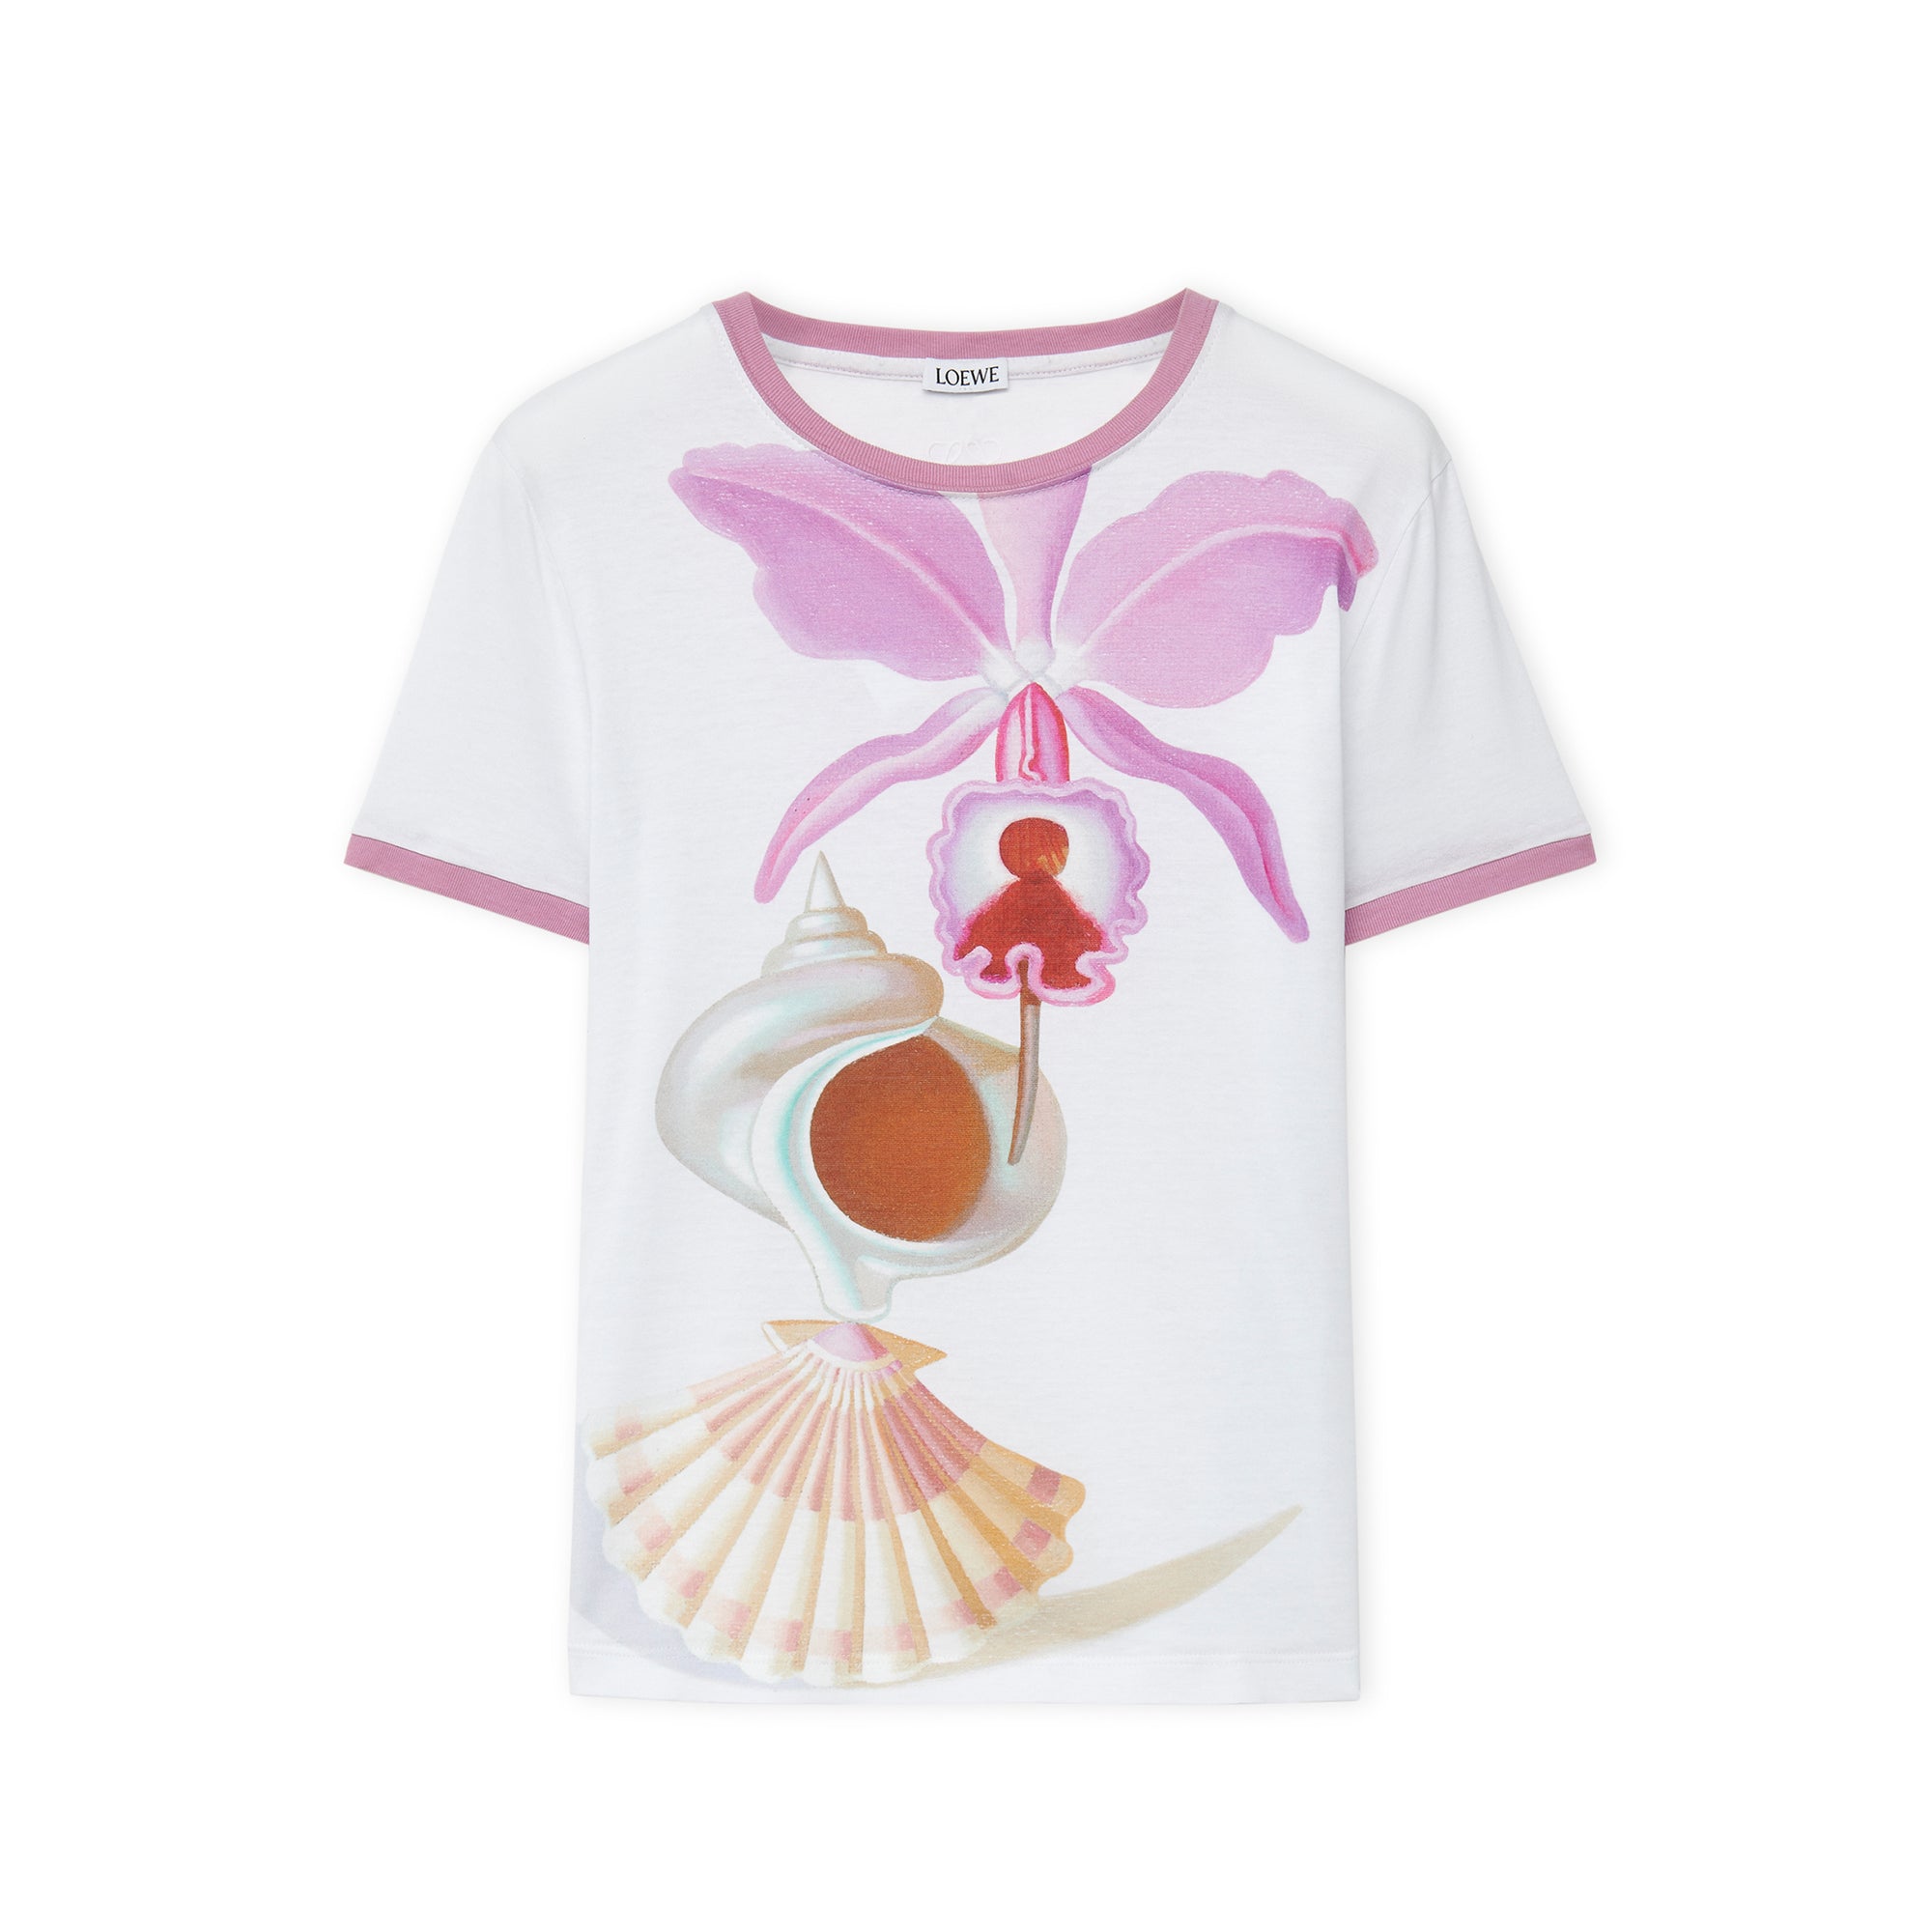 Loewe - Women’s Slim Fit T-Shirt - (White/Multicolour) view 1